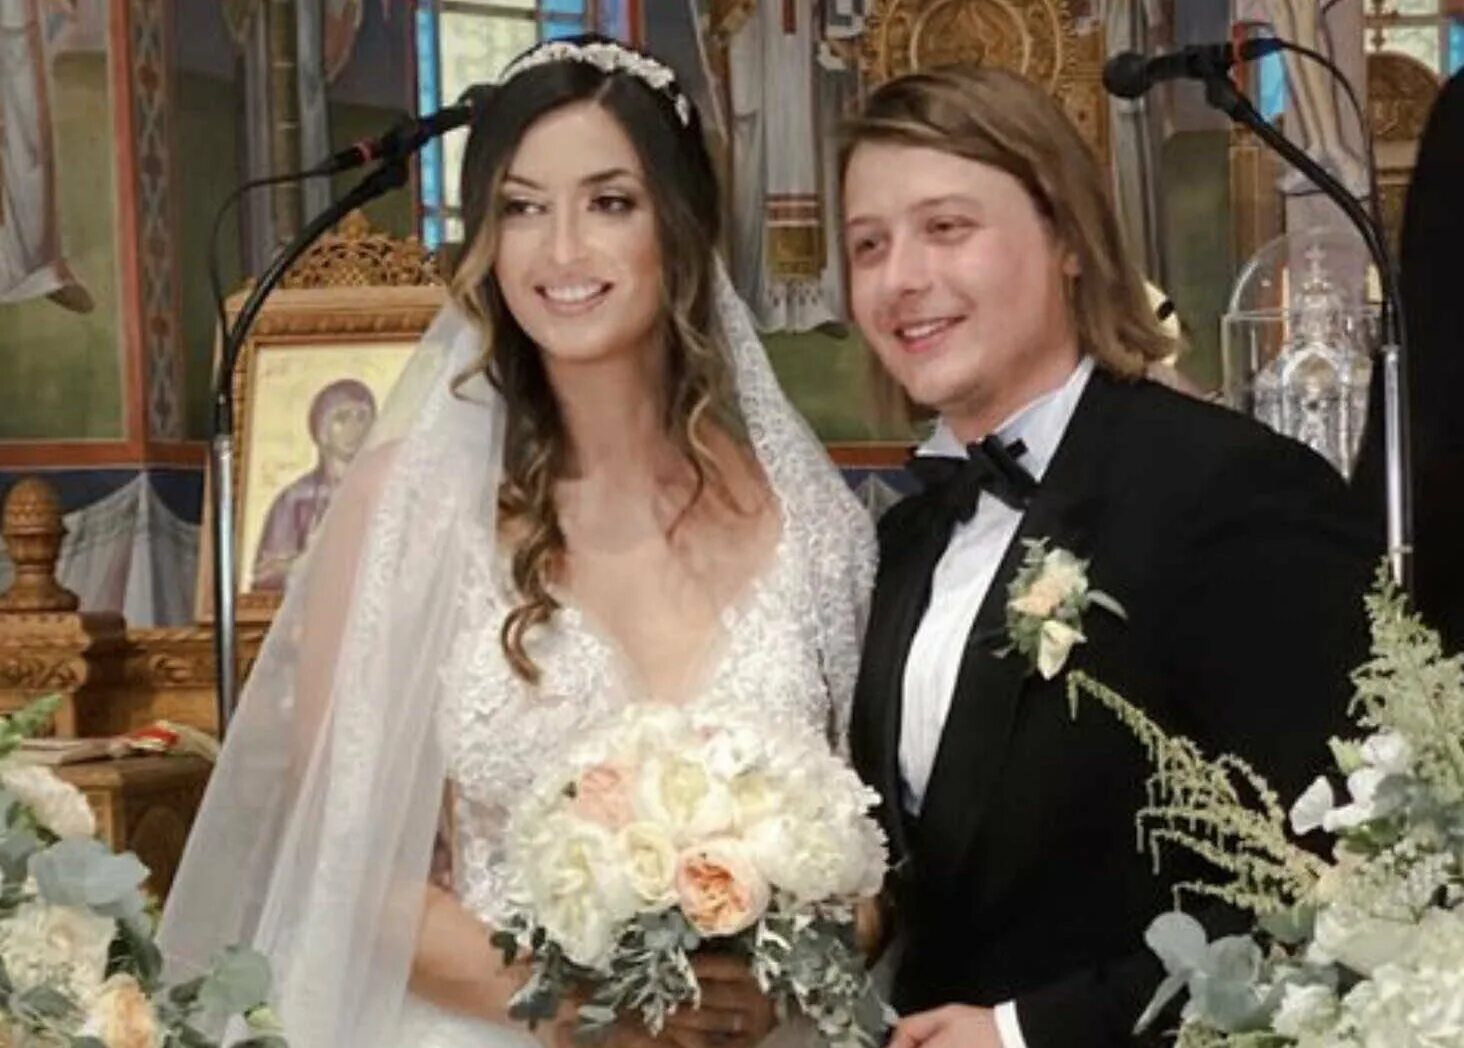 Звезда вышла замуж за неизвестного. Свадьба пасынка Стаса Михайлова. Свадьба пасынка Стаса Михайлова в греческой церкви.